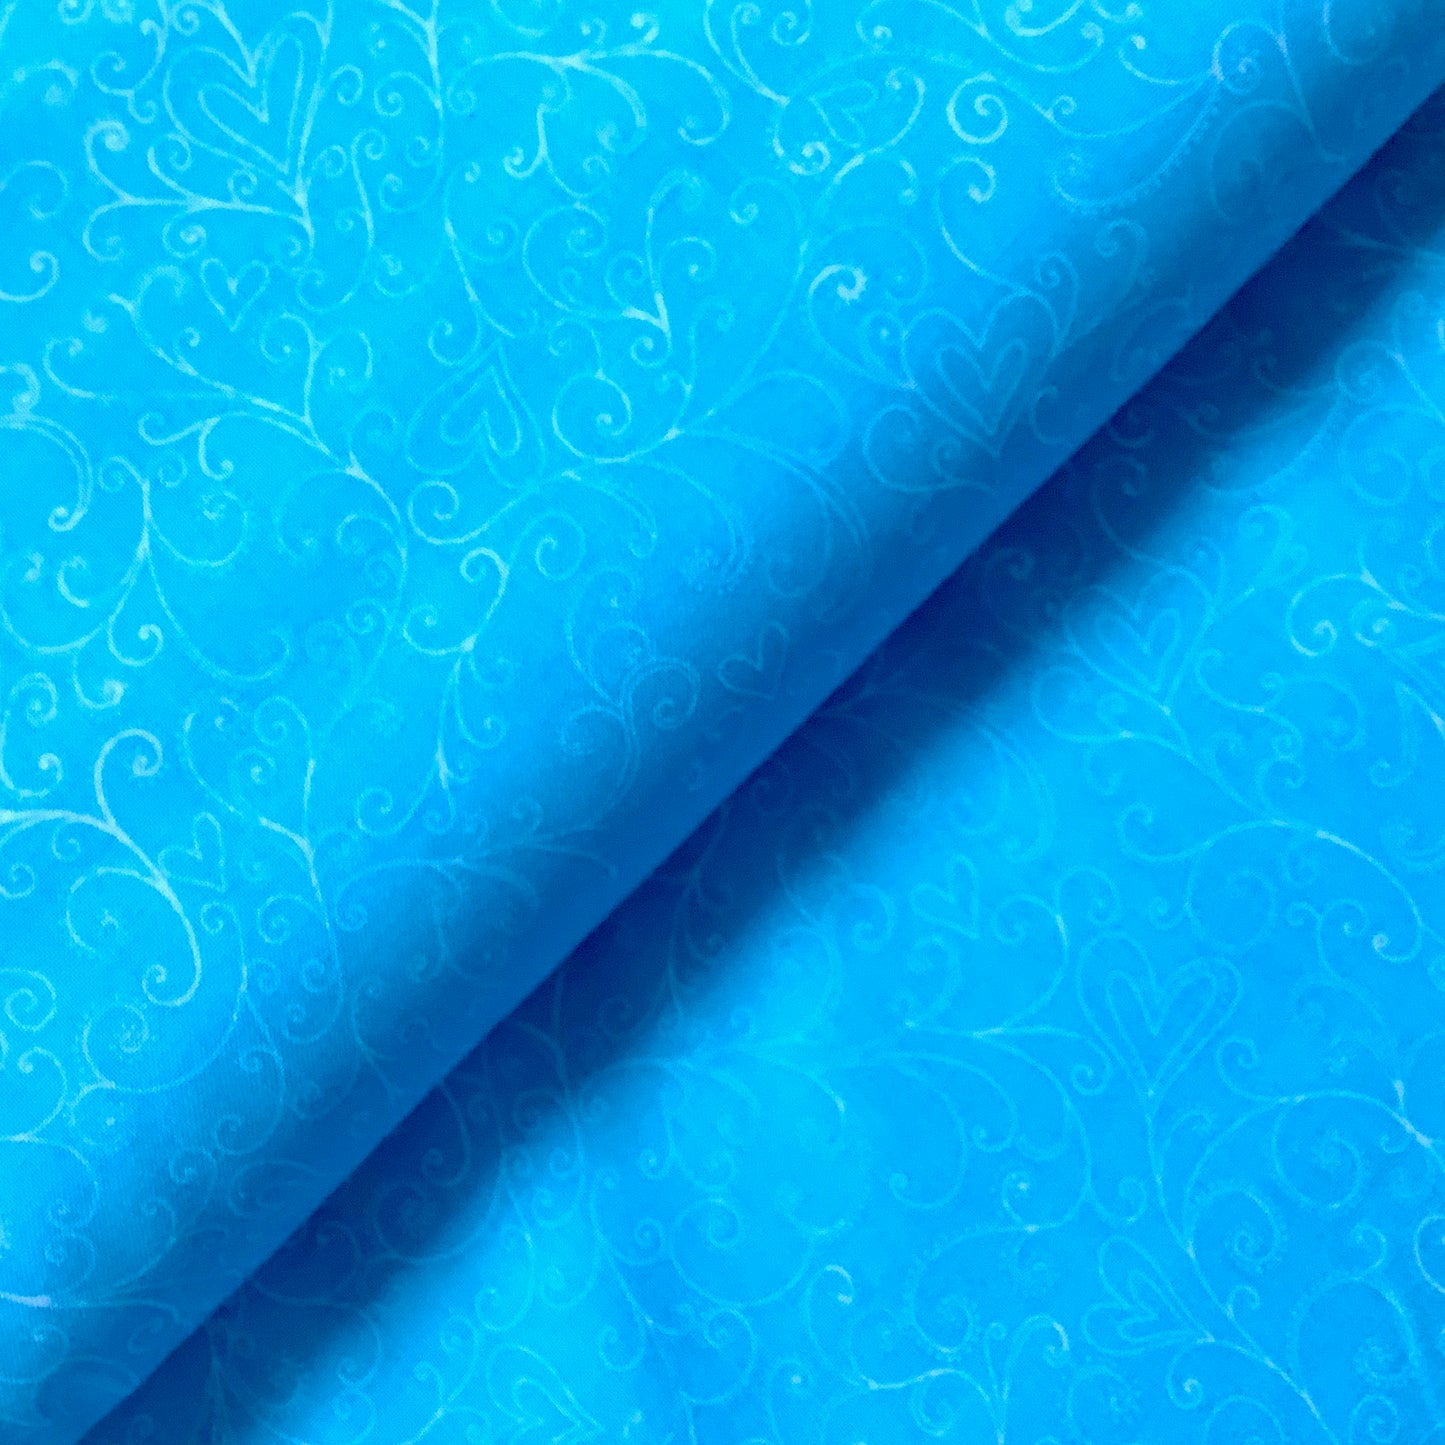 Windham Fabrics The Cat's Meow Blue with swirls 41603-4 100% Premium Cotton Fabric